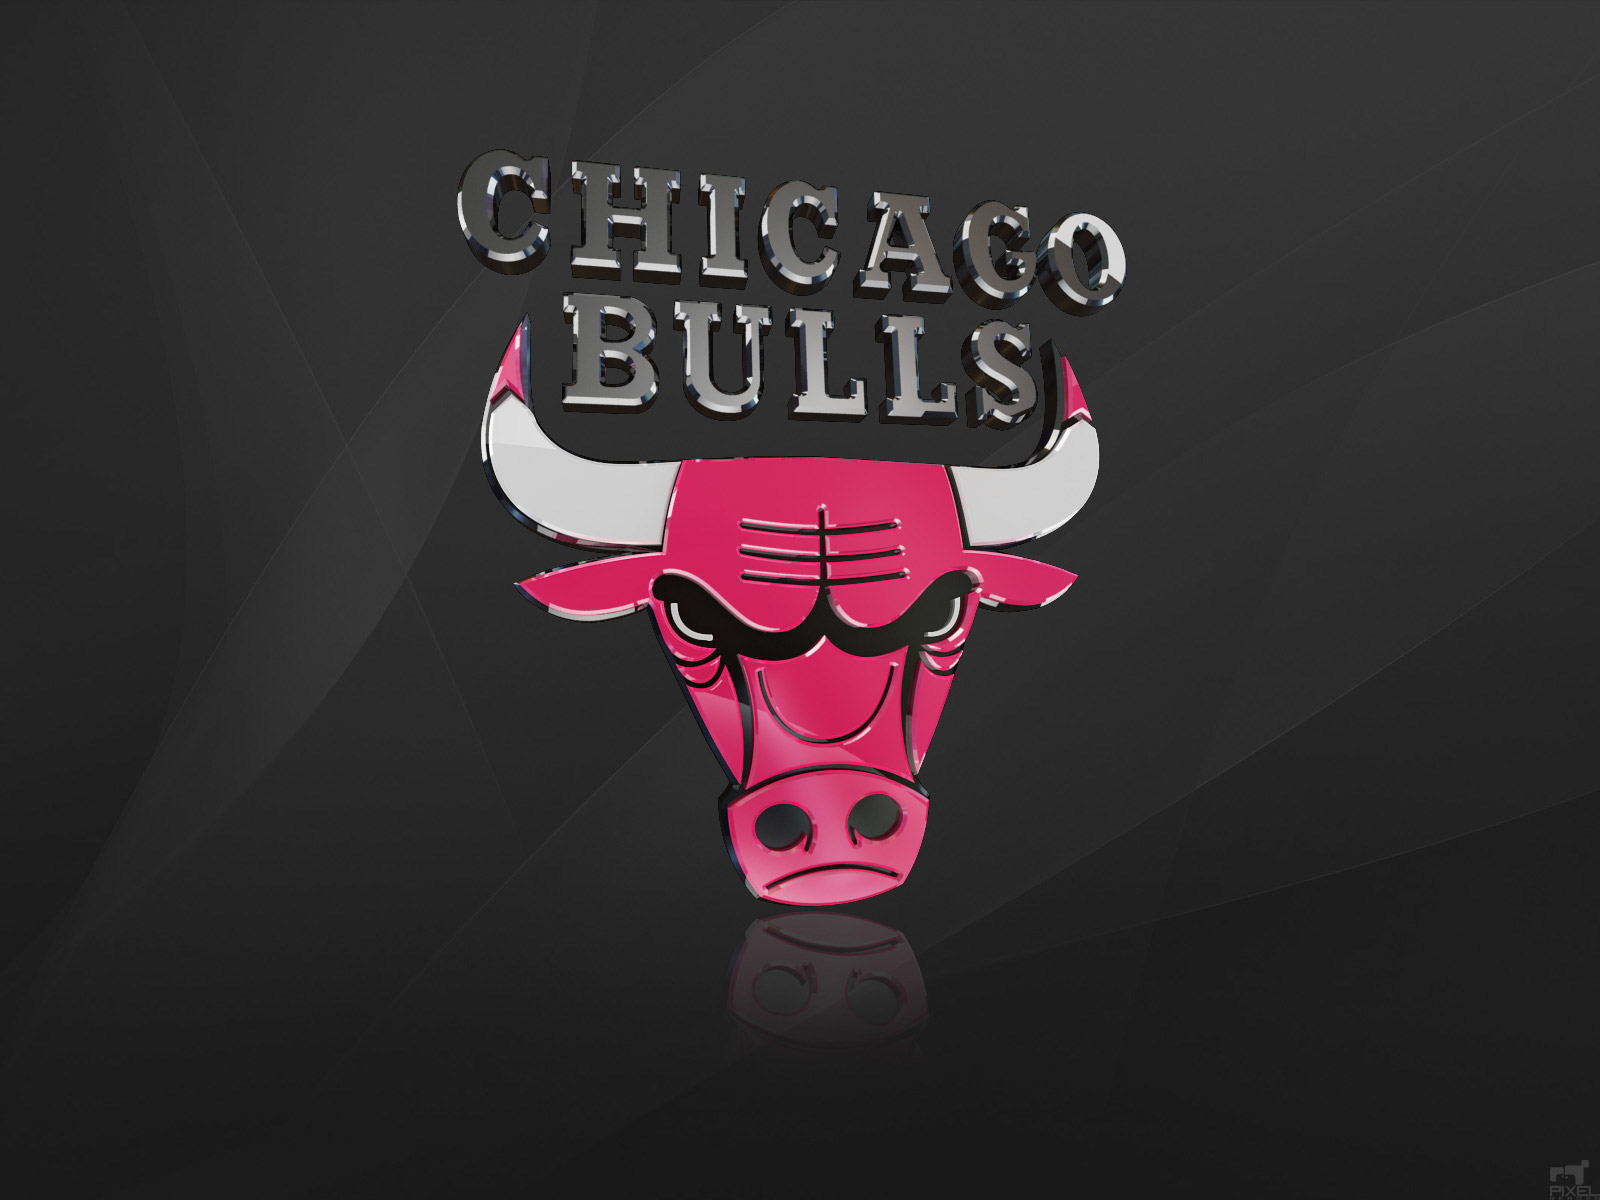 Download wallpaper wallpaper sport logo basketball NBA Chicago Bulls  glitter checkered section sports in resolution 1024x1024